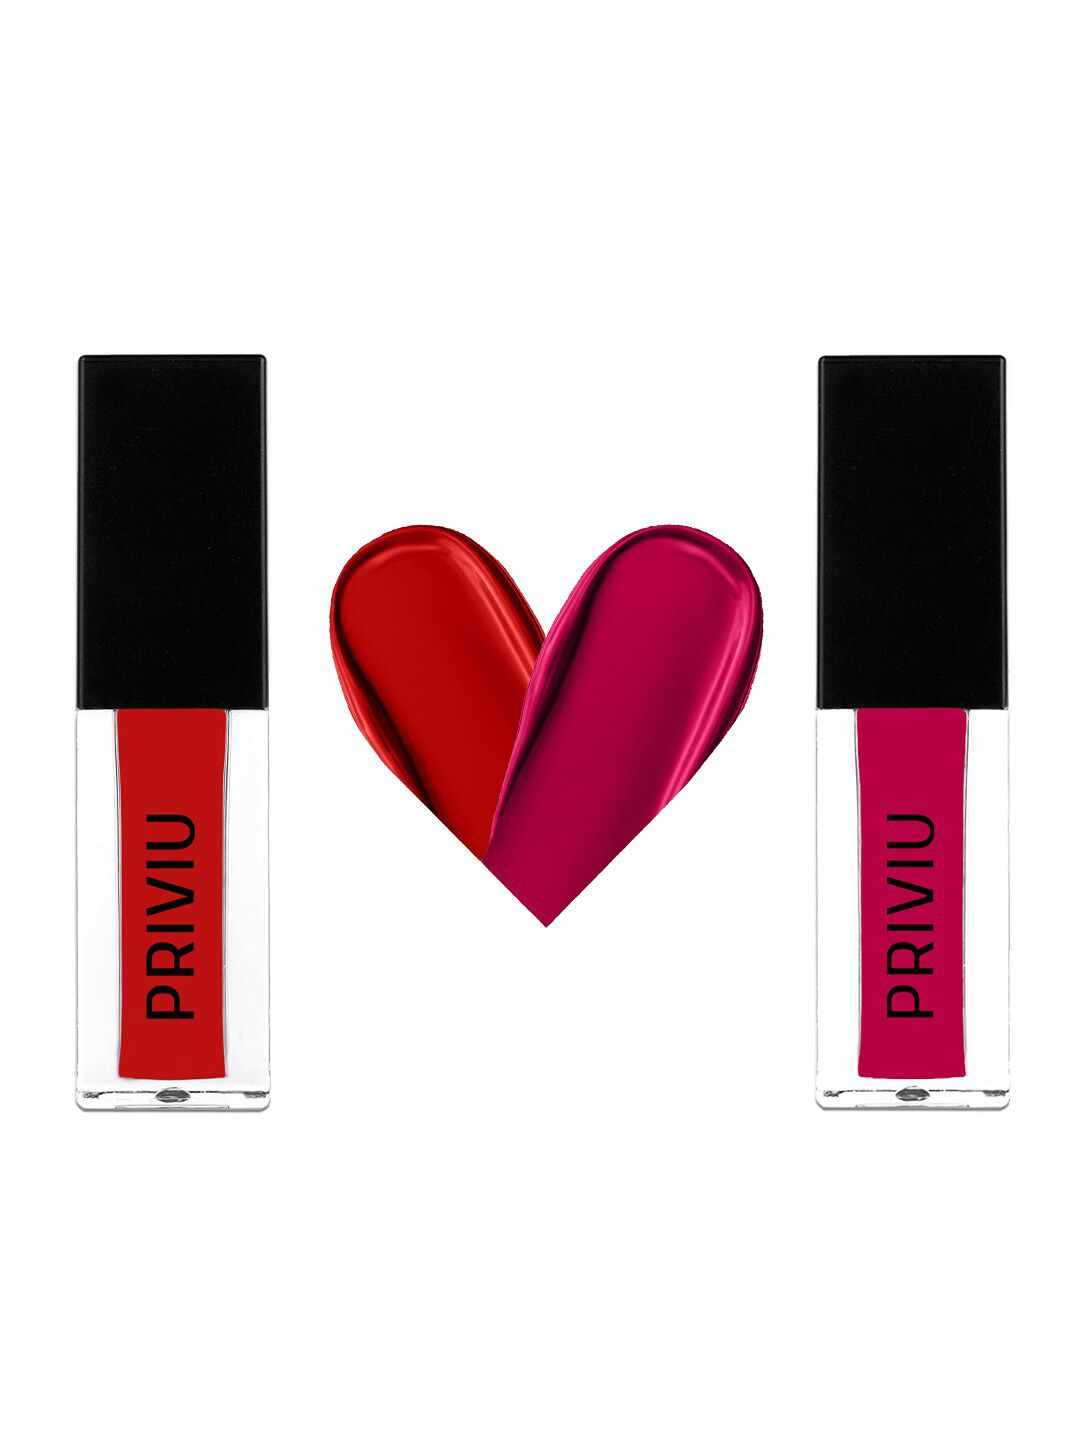 PRIVIU Set of 2 Matte Liquid Lipstick - Cherry Berry , Fuschia Pink Price in India